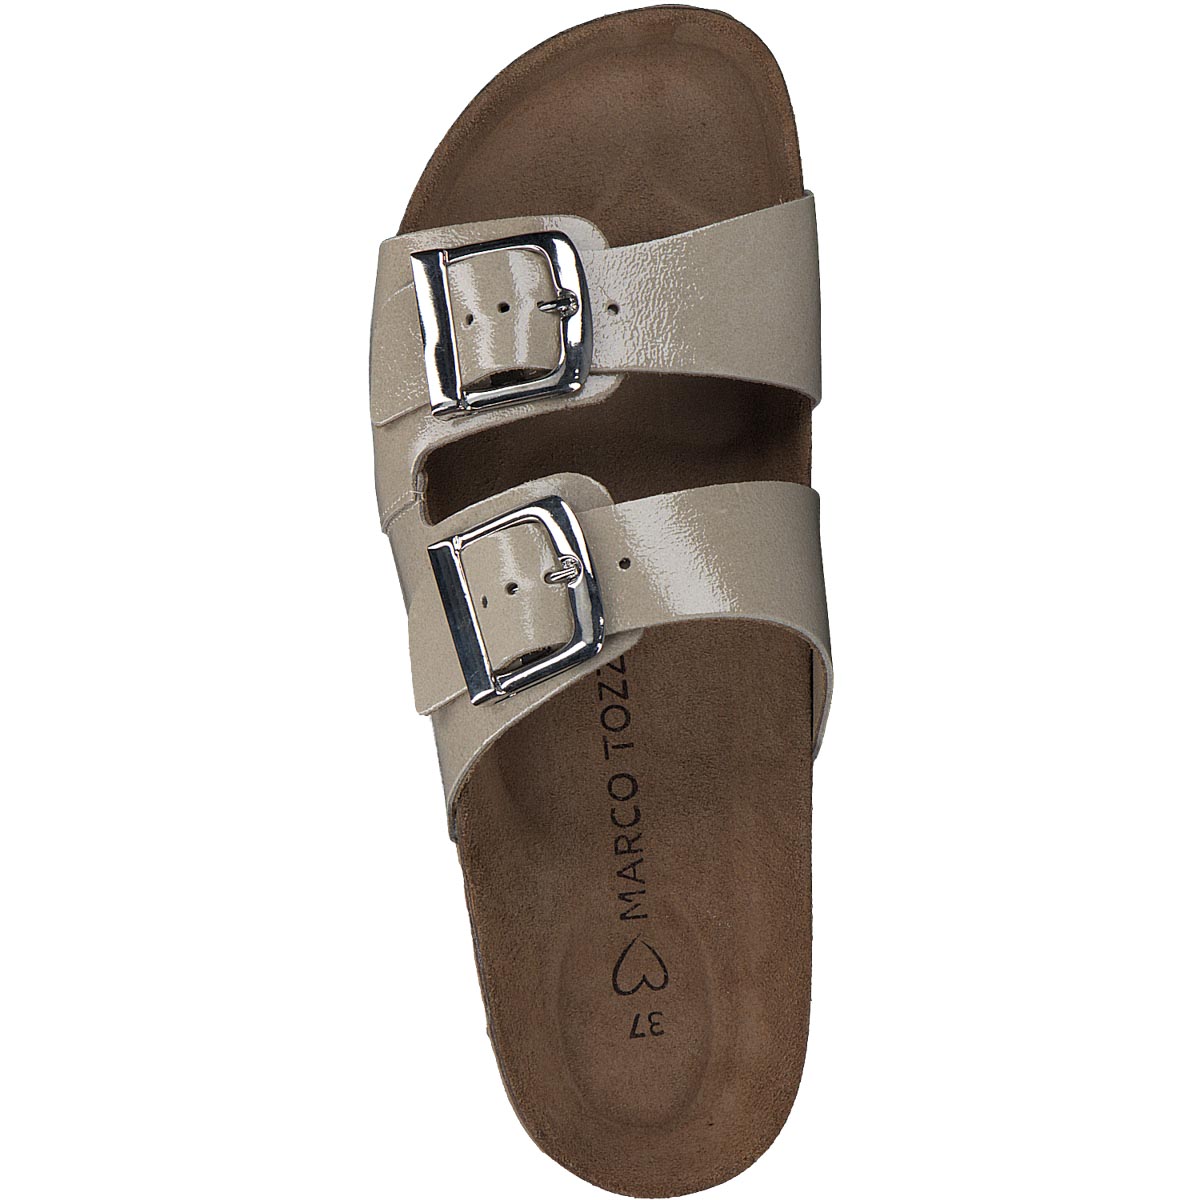 Easy Breezy Slip-On Mule Sandals for Effortless Style